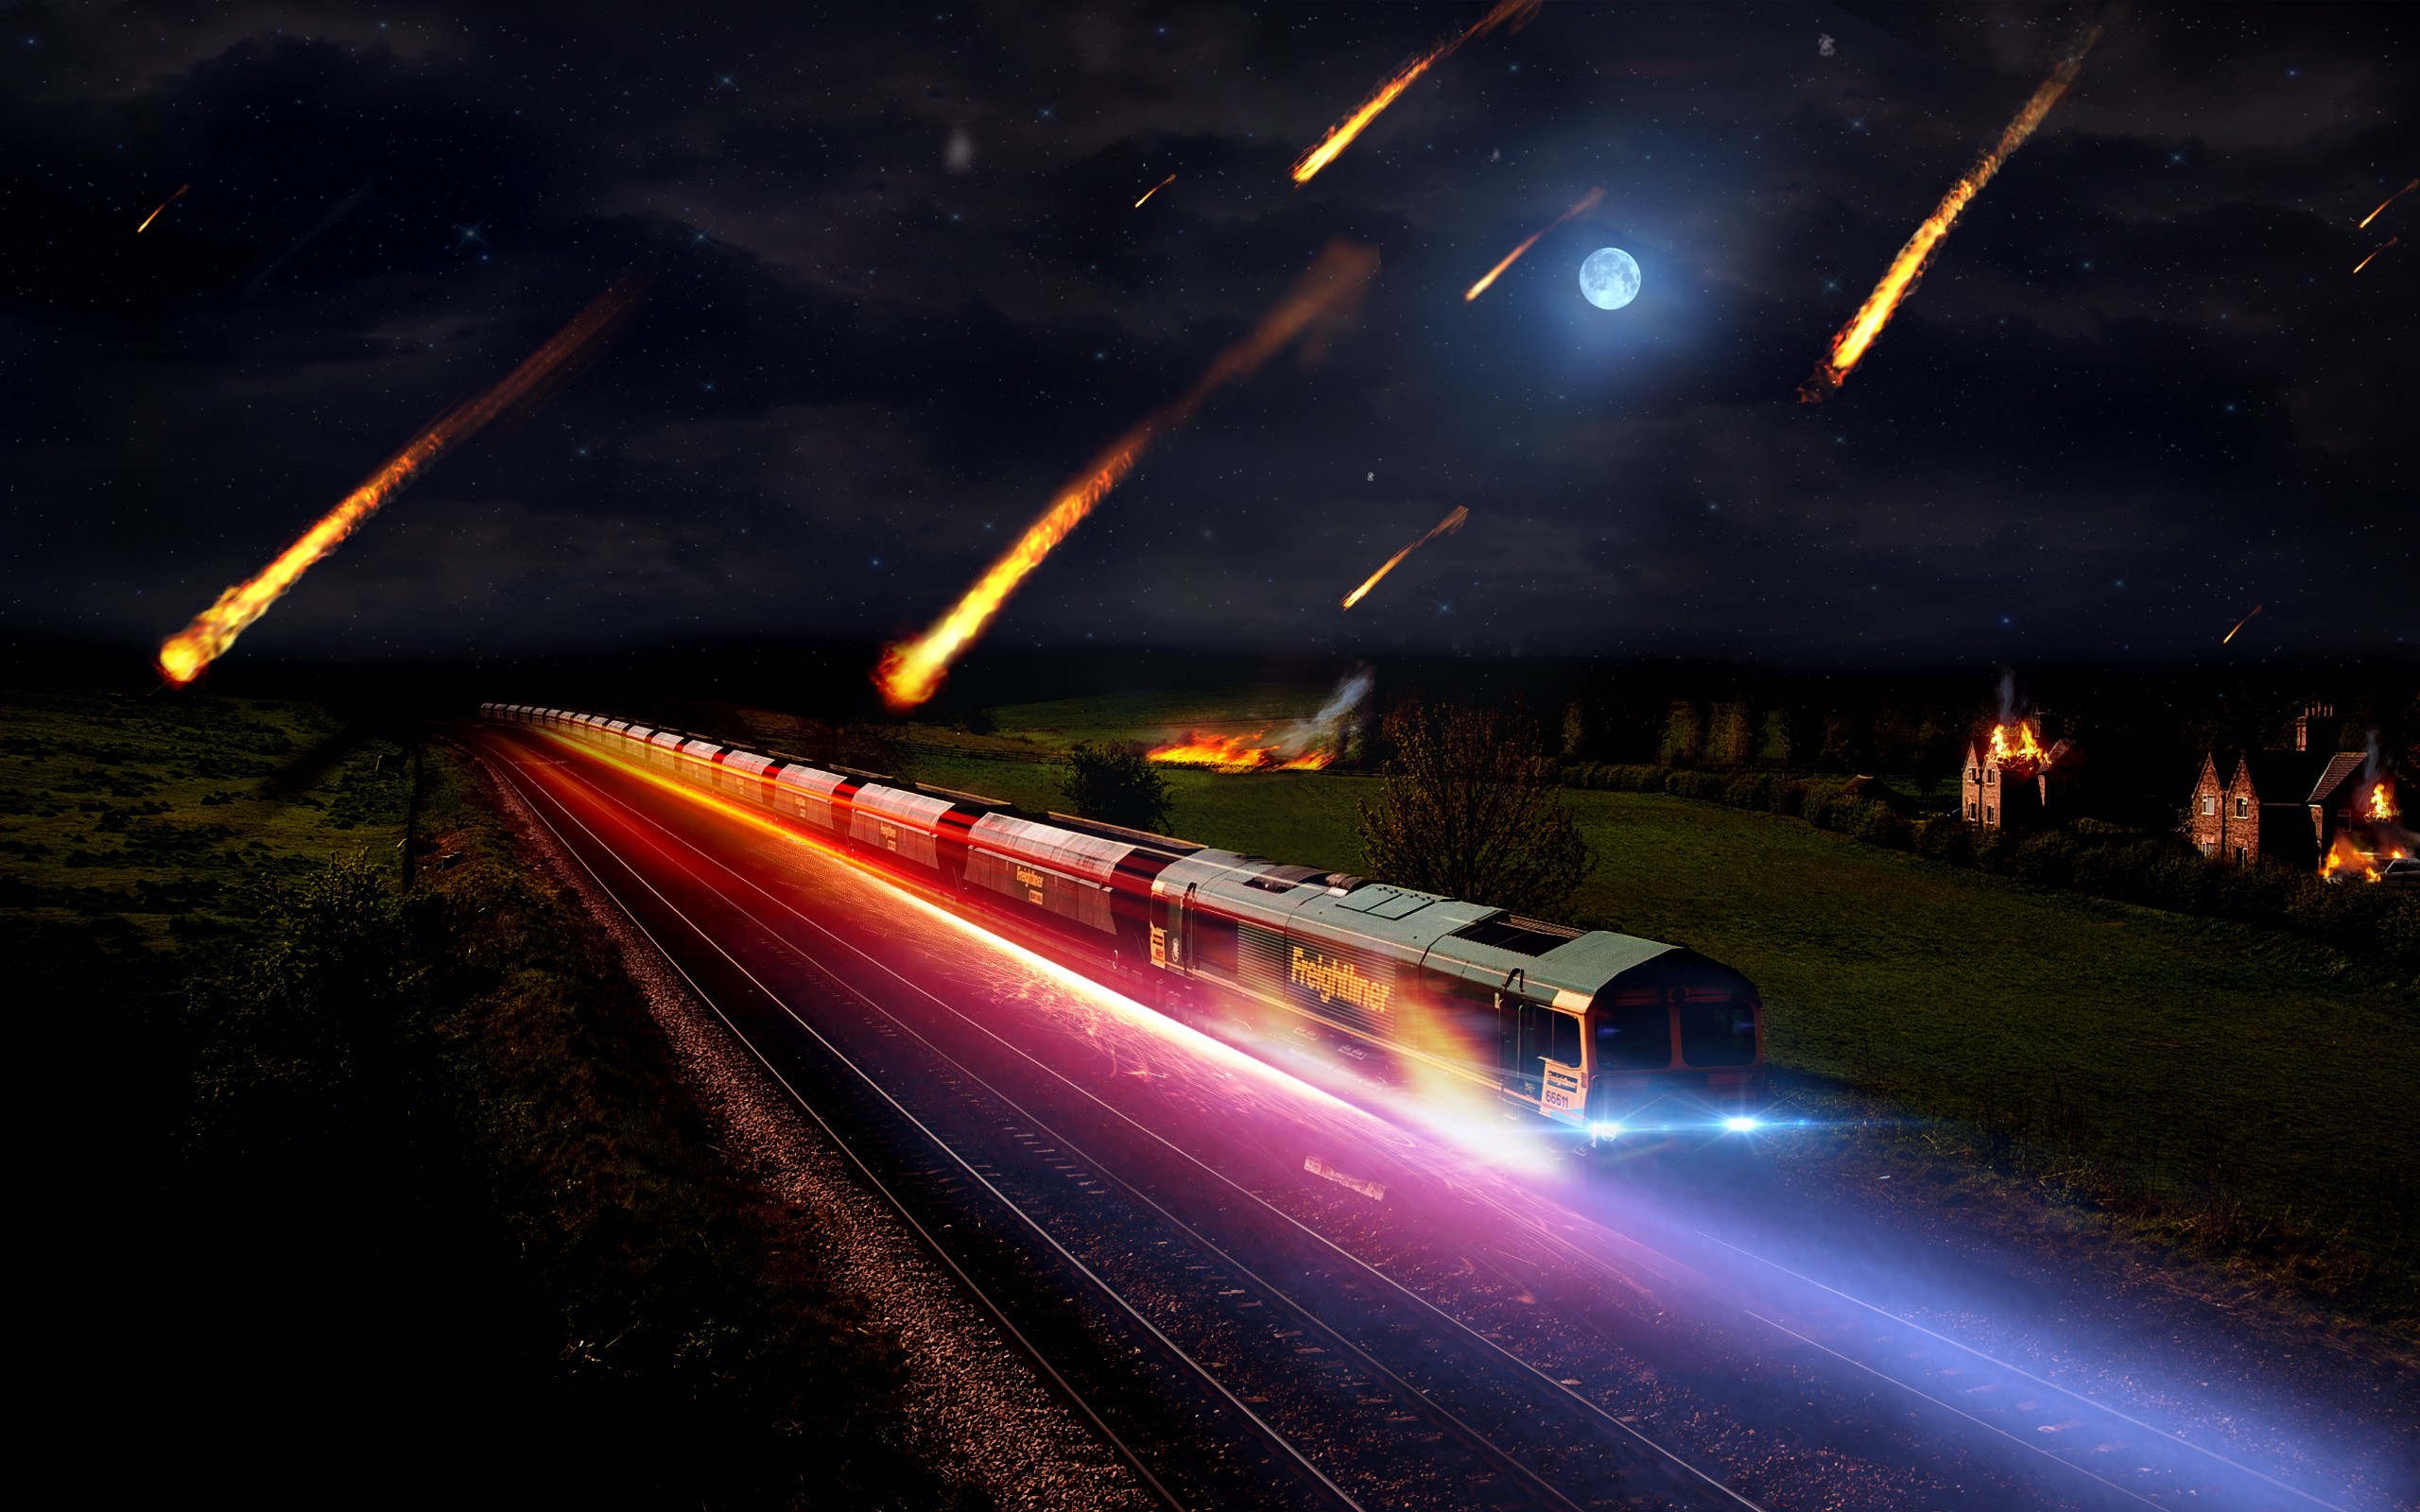 General 2560x1600 digital art train vehicle night sky Moon meteorite sky fire railway